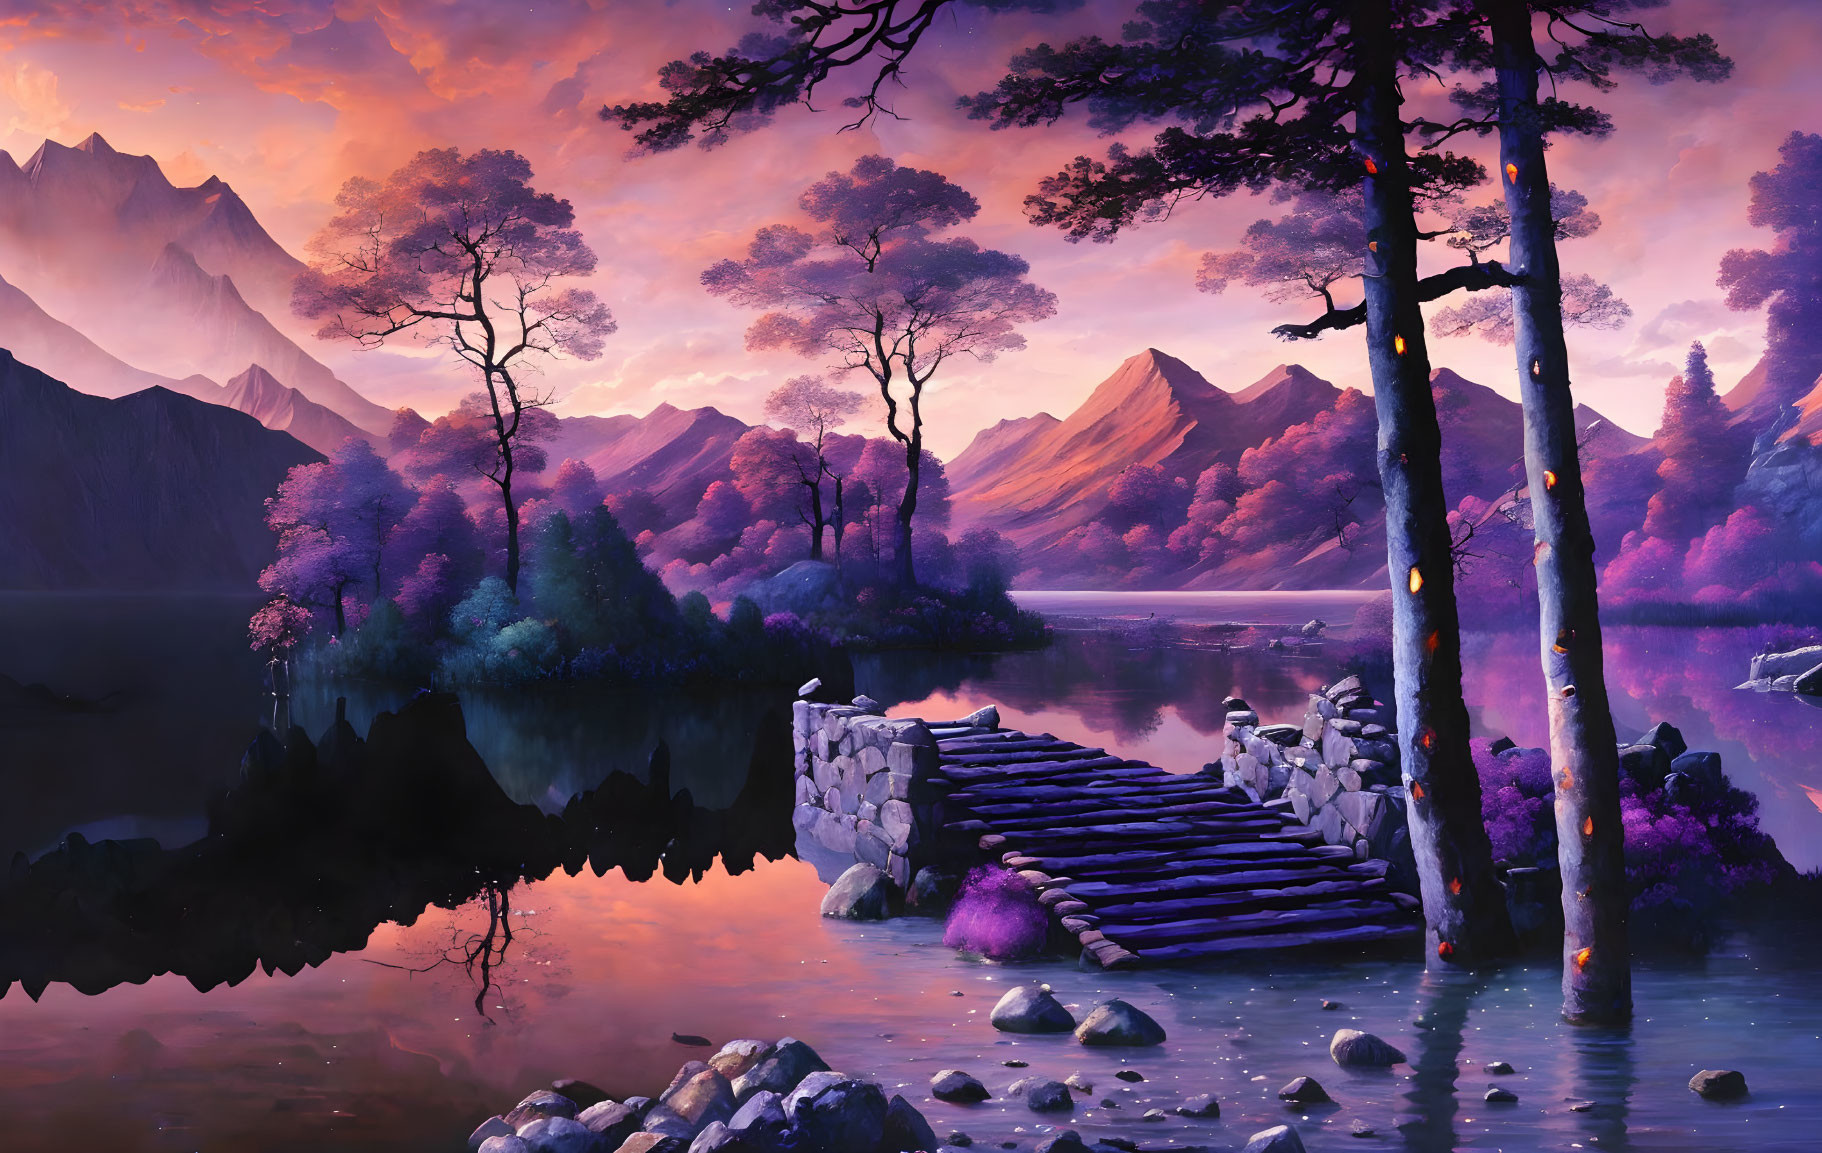 Vibrant purple landscape with lake, trees, mountains, and footbridge